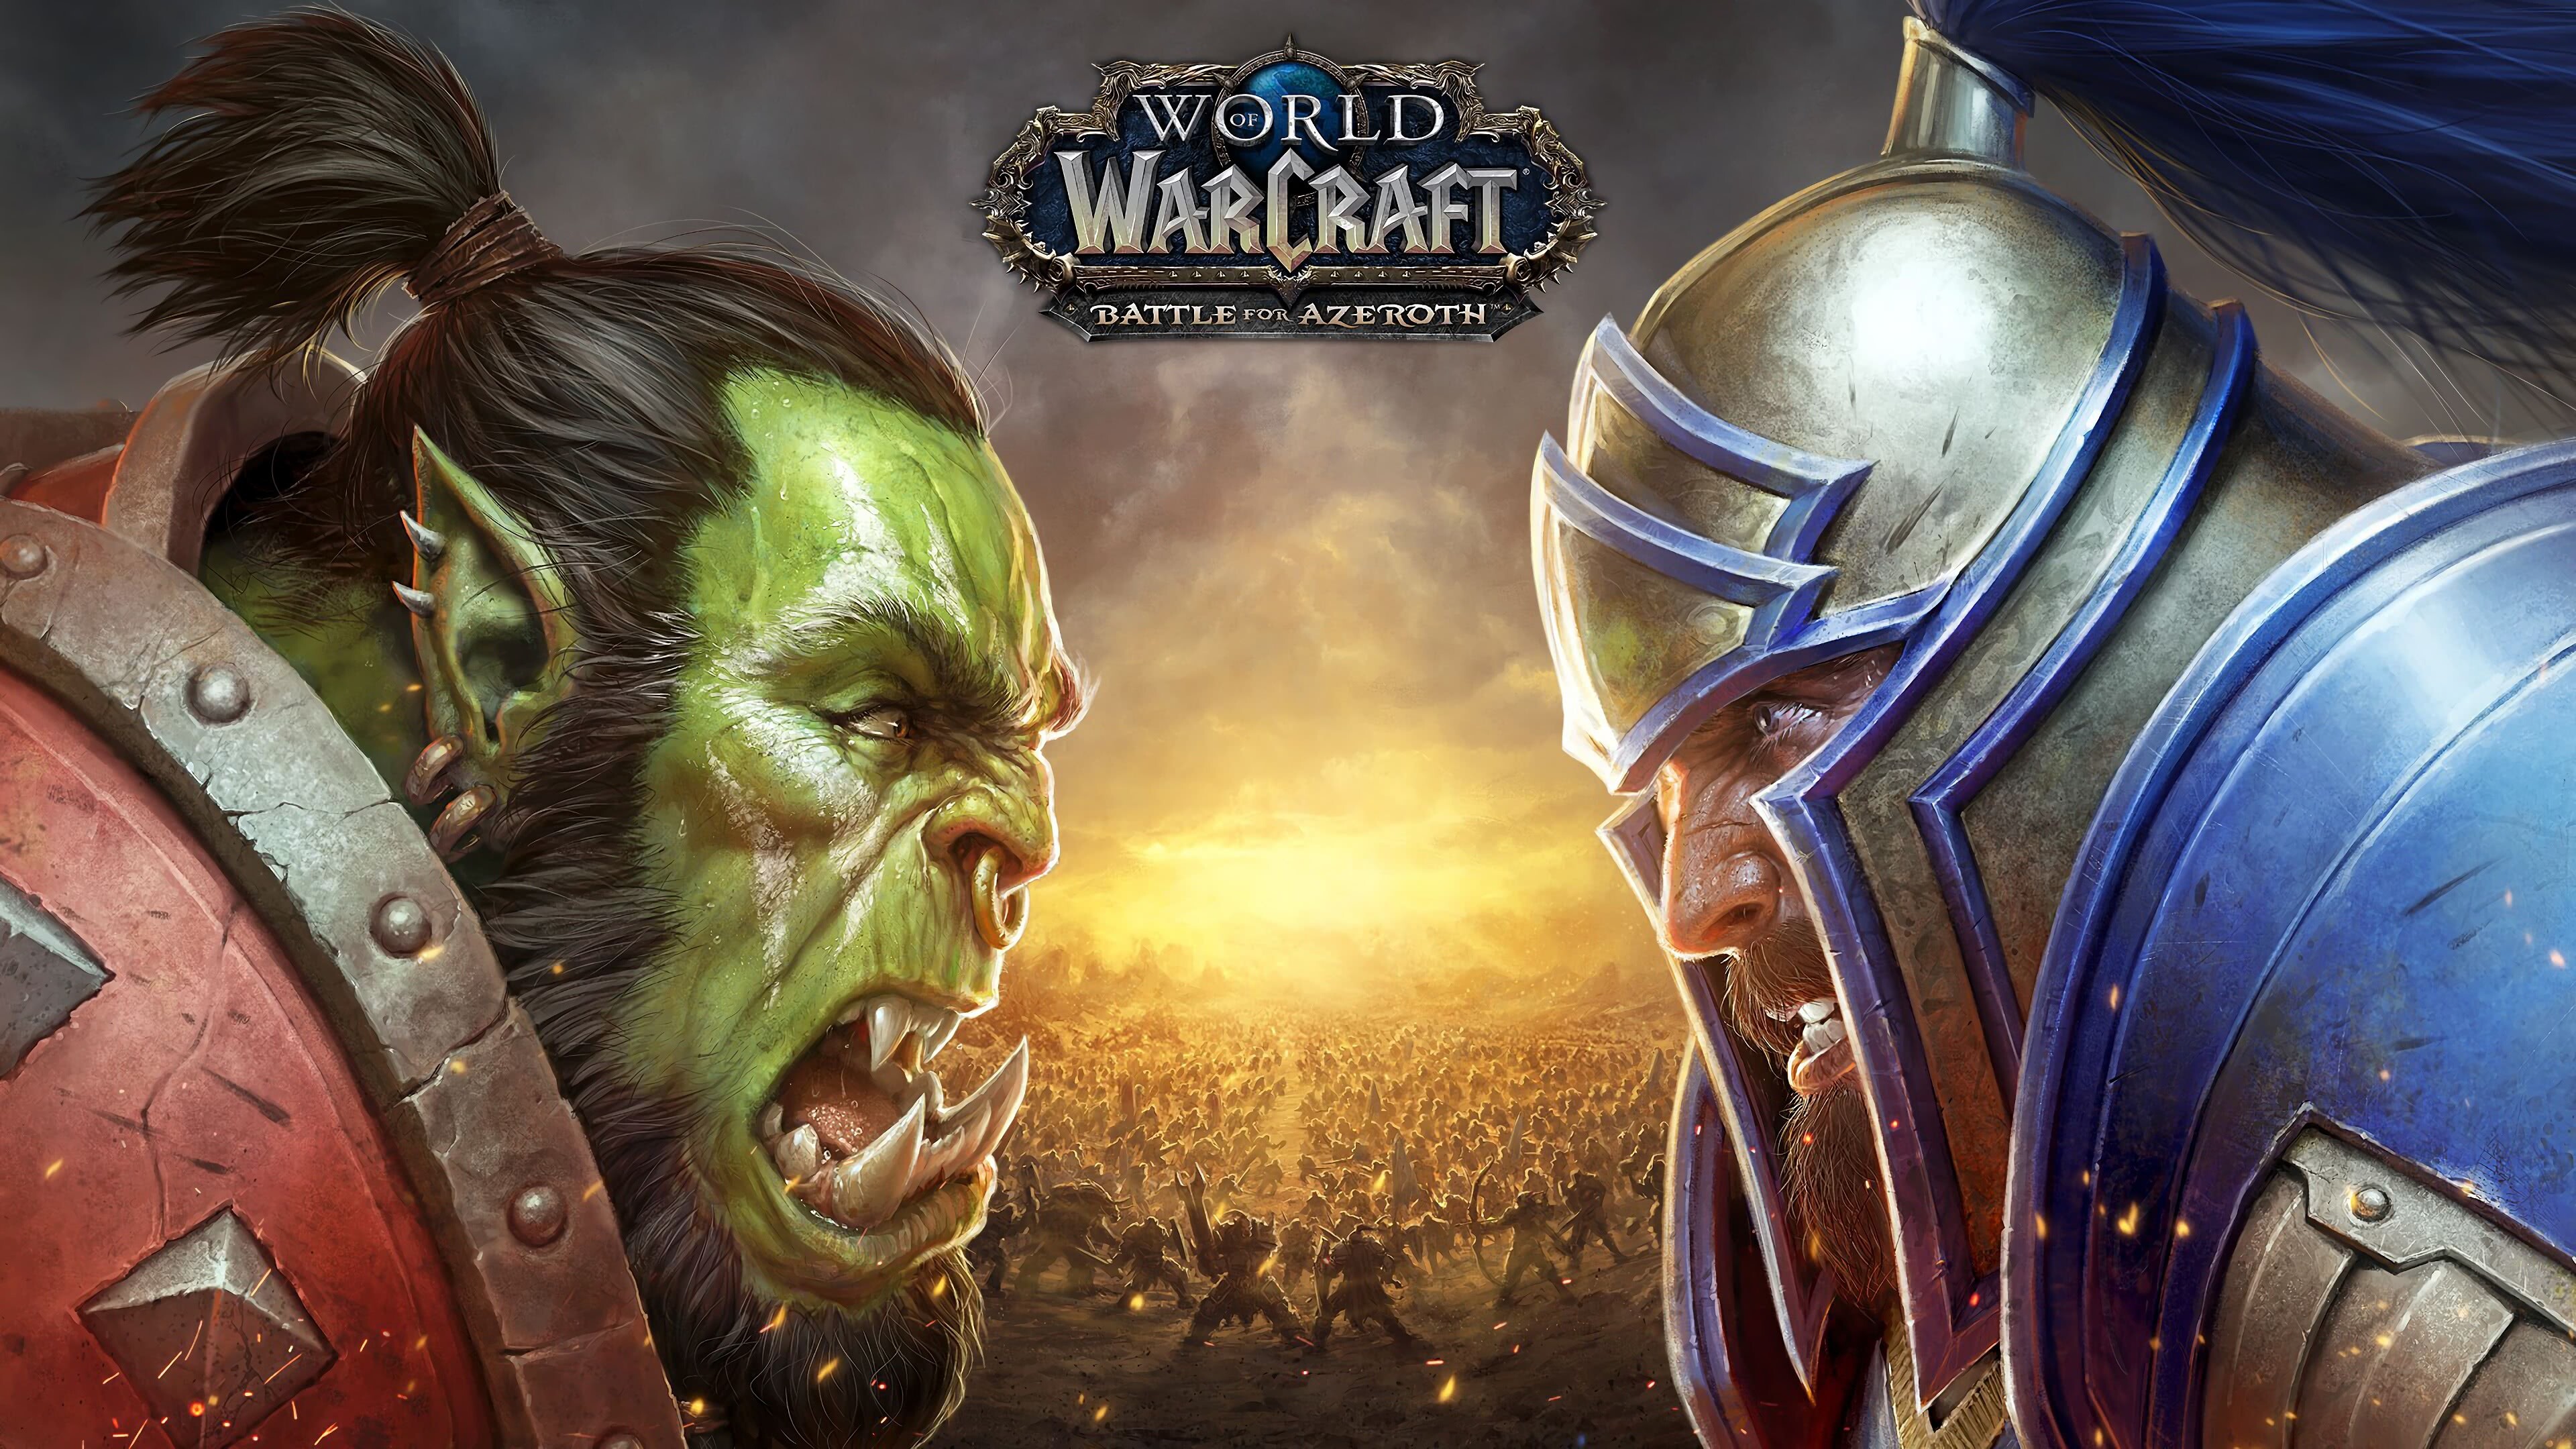 World of Warcraft: Battle For Azeroth, Horde Vs Alliance. 3840x2160 4K Wallpaper.